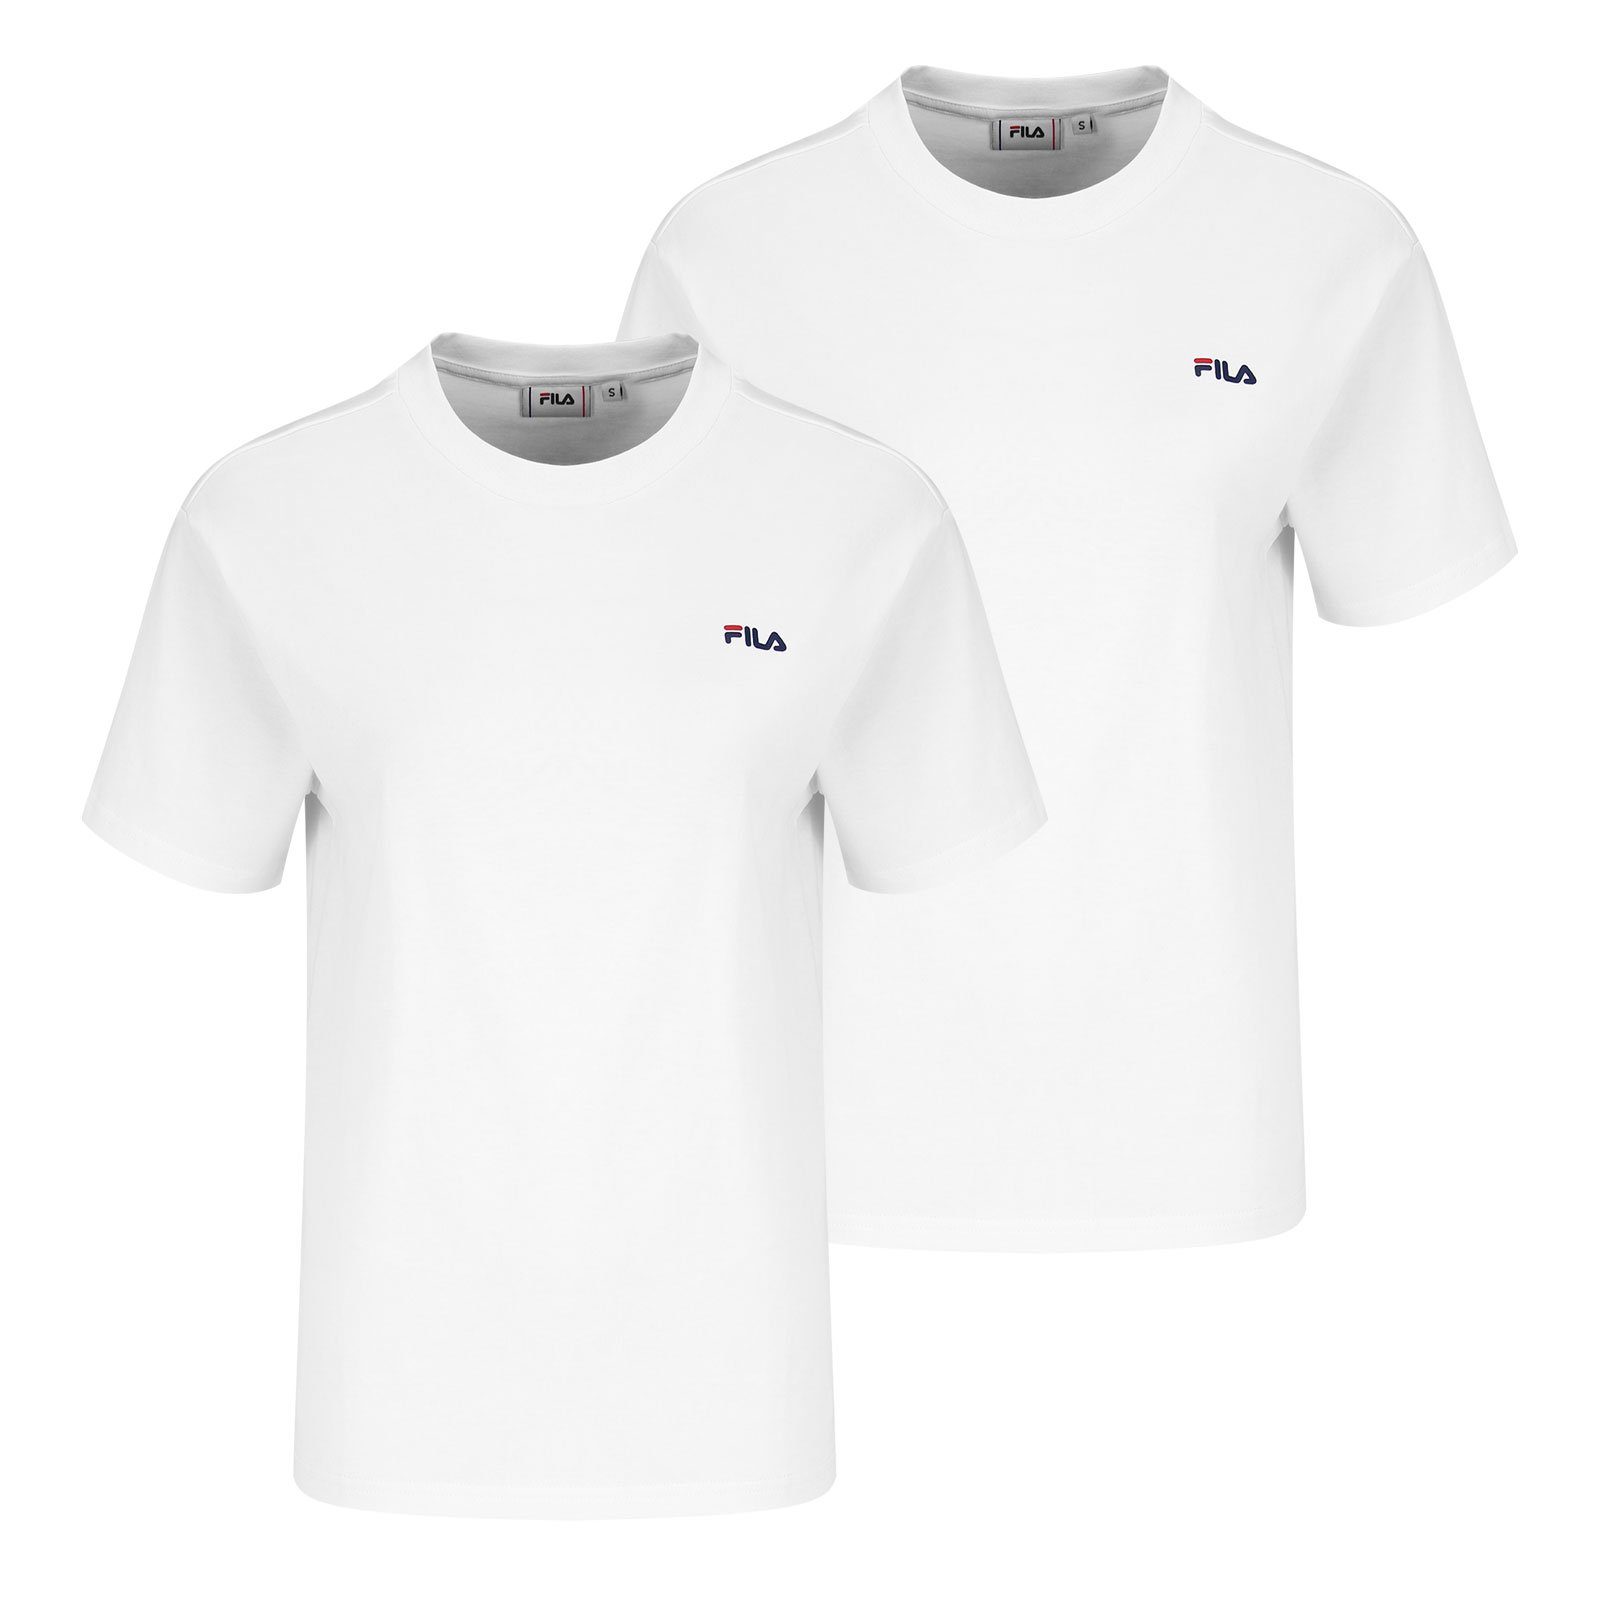 Fila T-Shirt 2er Pack Bari aus weichem Baumwollmaterial 13108 white / white